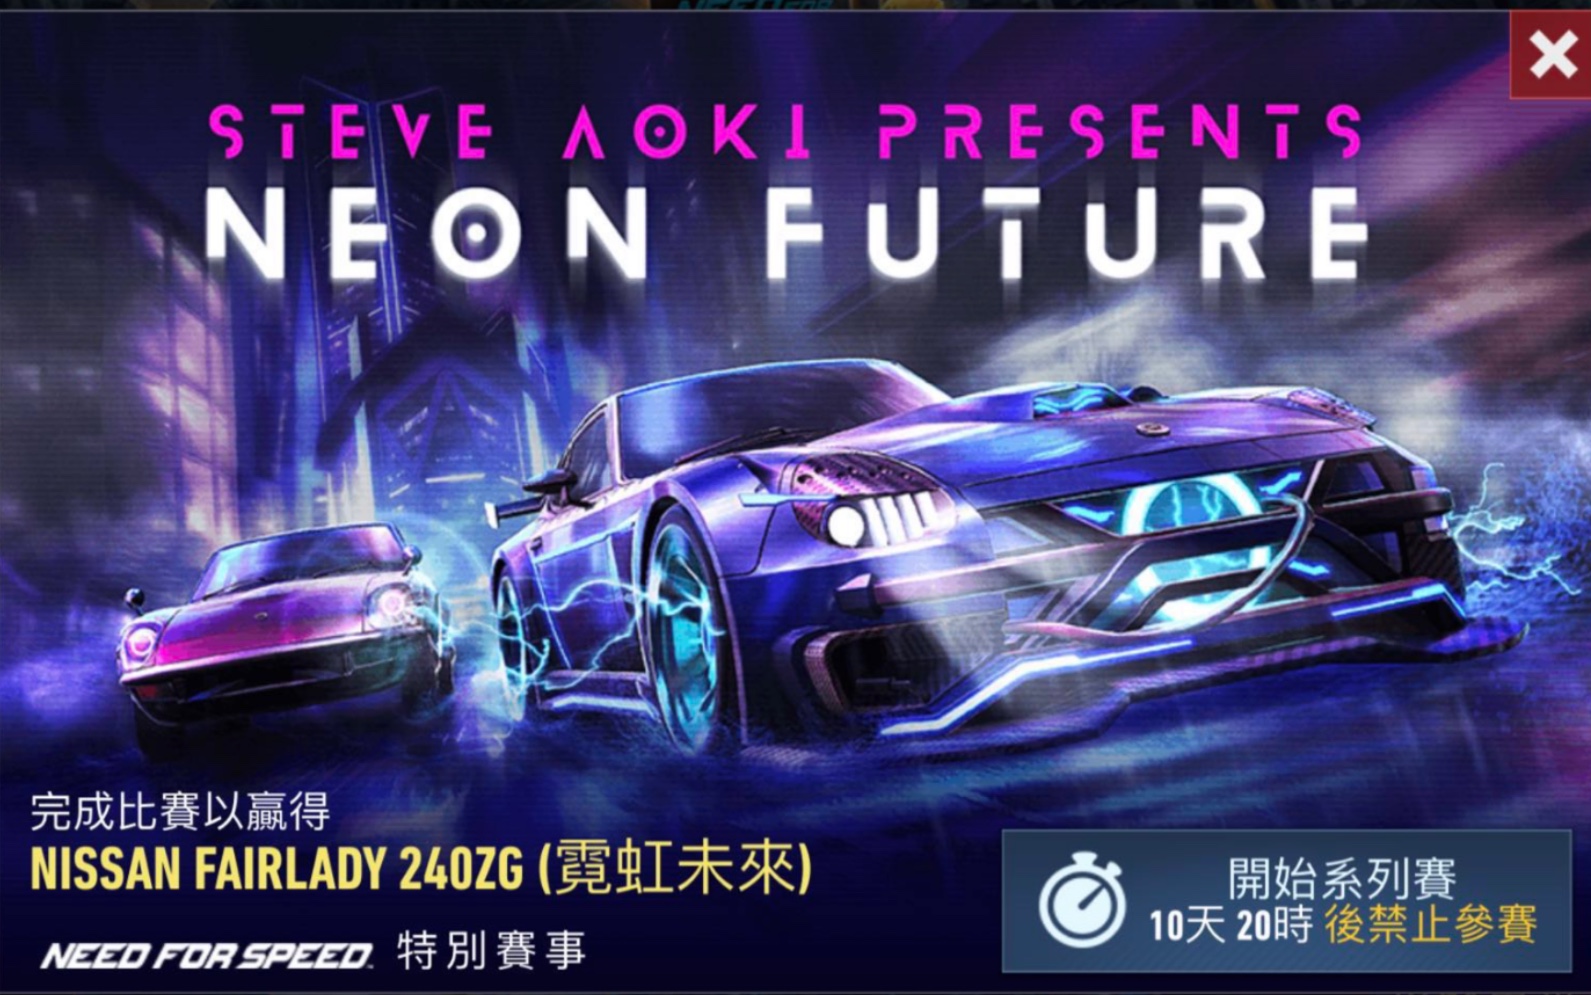 极品飞车 无限狂飙 霓虹未来nissan Fairlady 240zg Neon Future 特殊赛 哔哩哔哩 つロ干杯 Bilibili